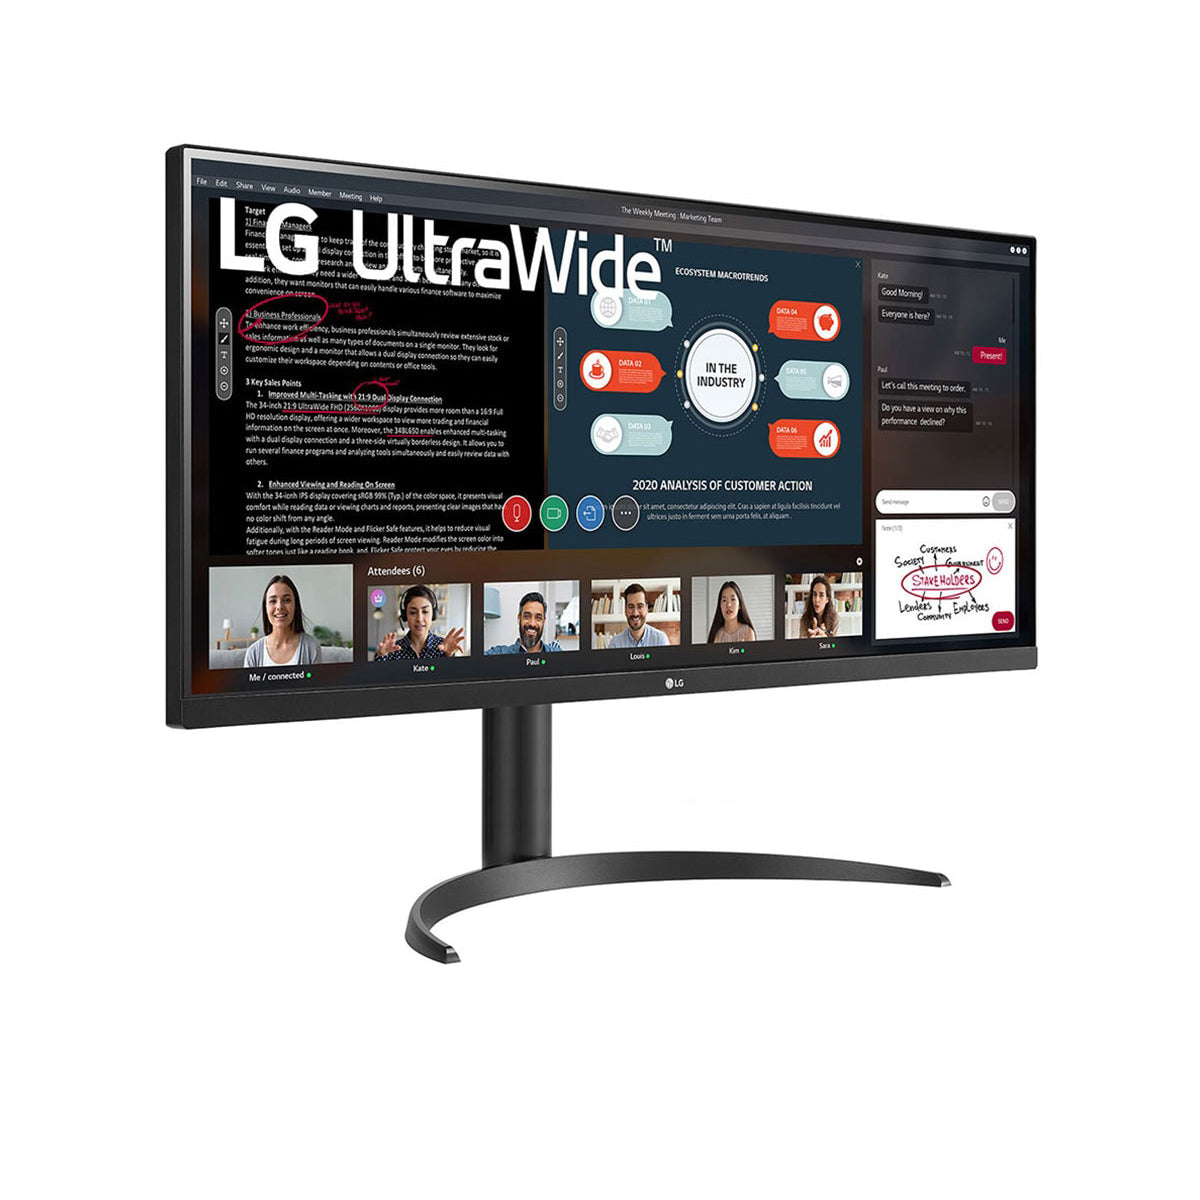 LG 34WP550-B 34" UltraWide FHD IPS HDR 75Hz Monitor (Brand New)